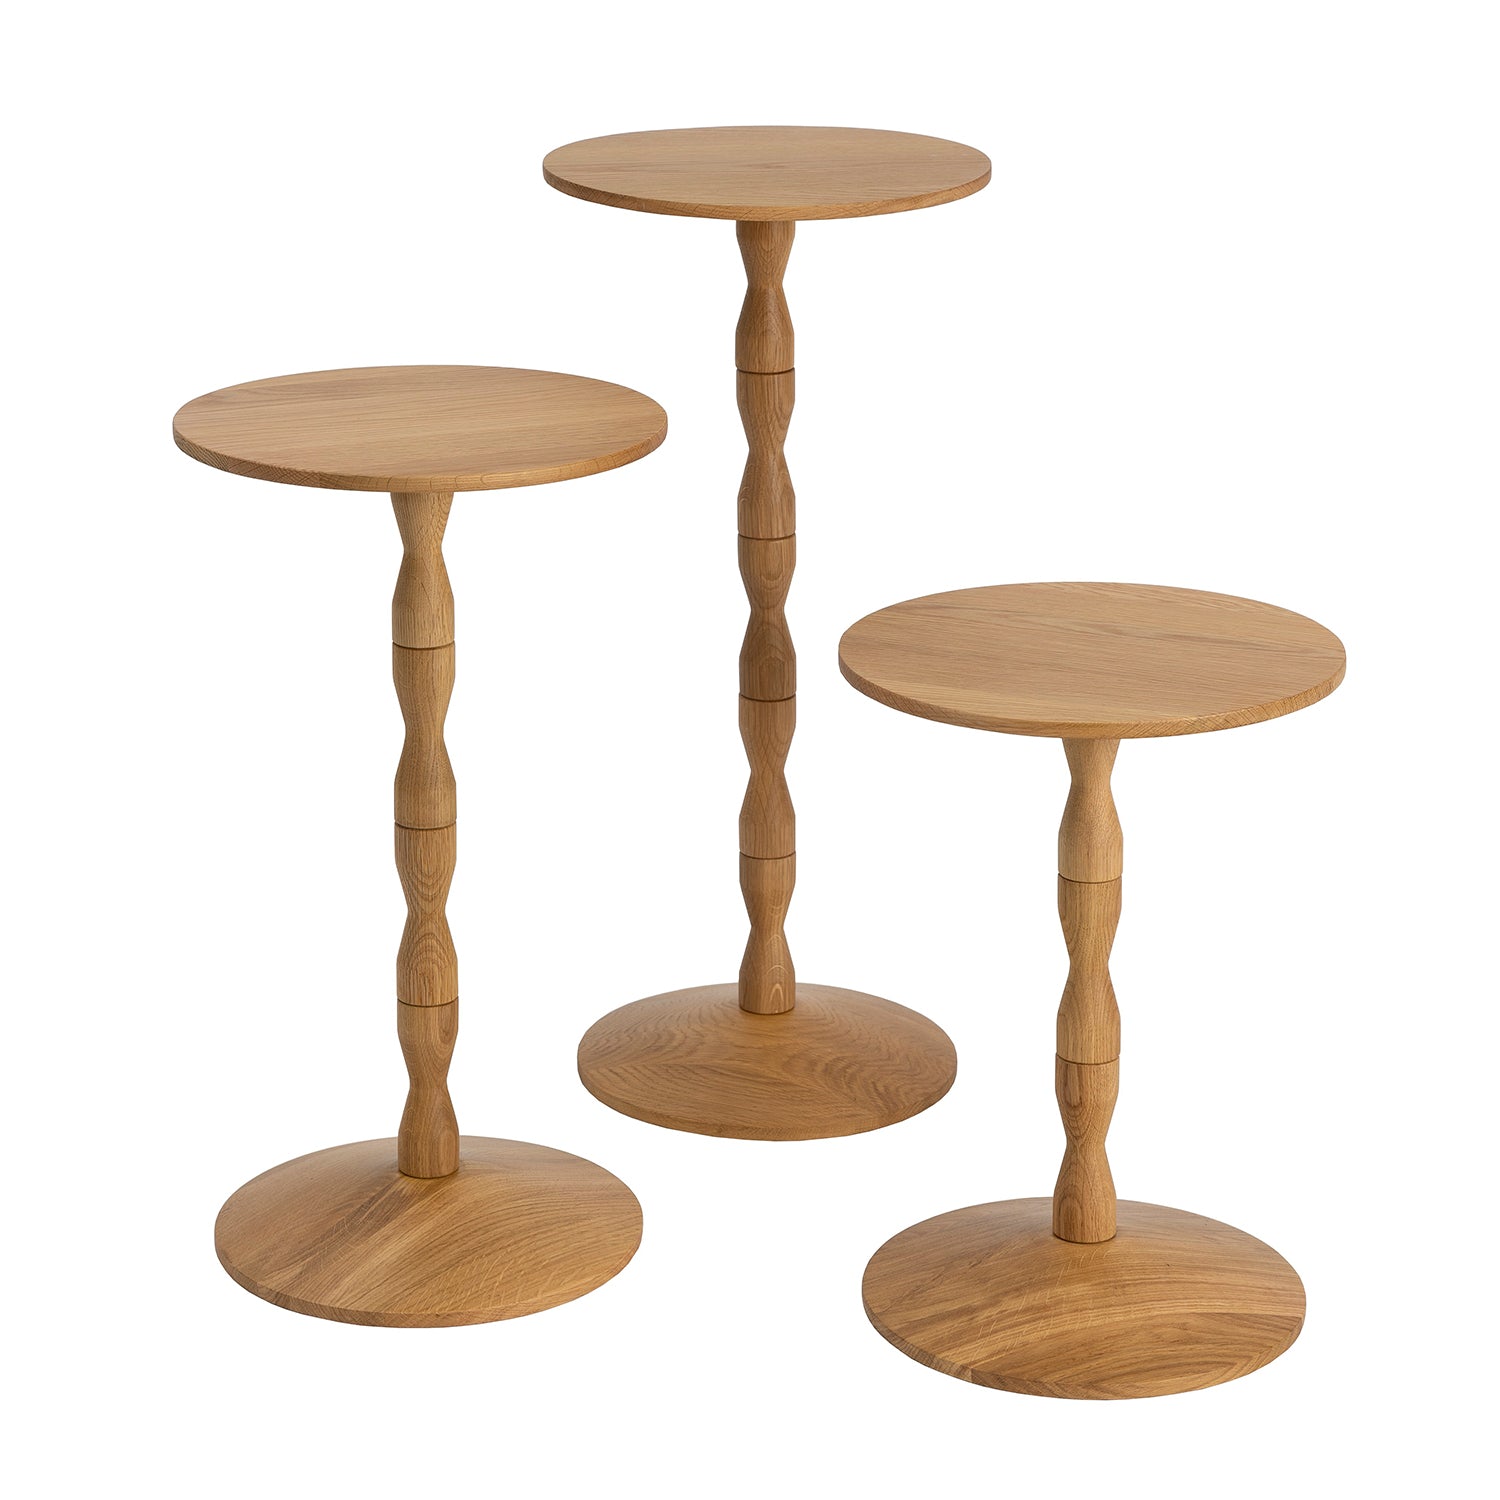 Pedestal Table - The Design Choice